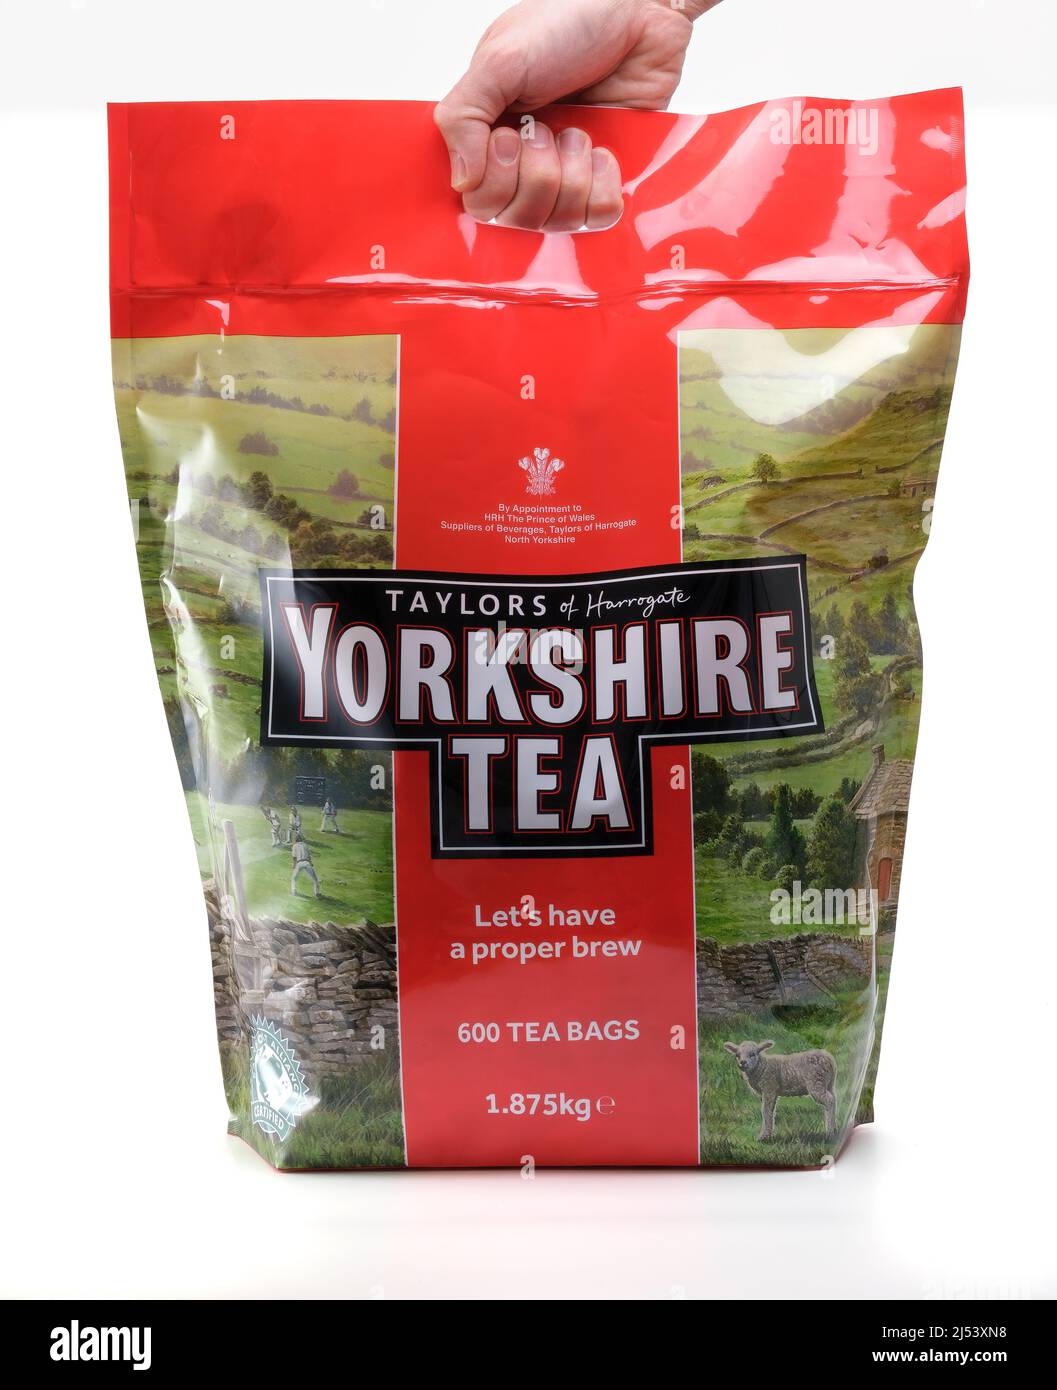 Yorkshire Tea (Pack of 3, Total 480 Bags)